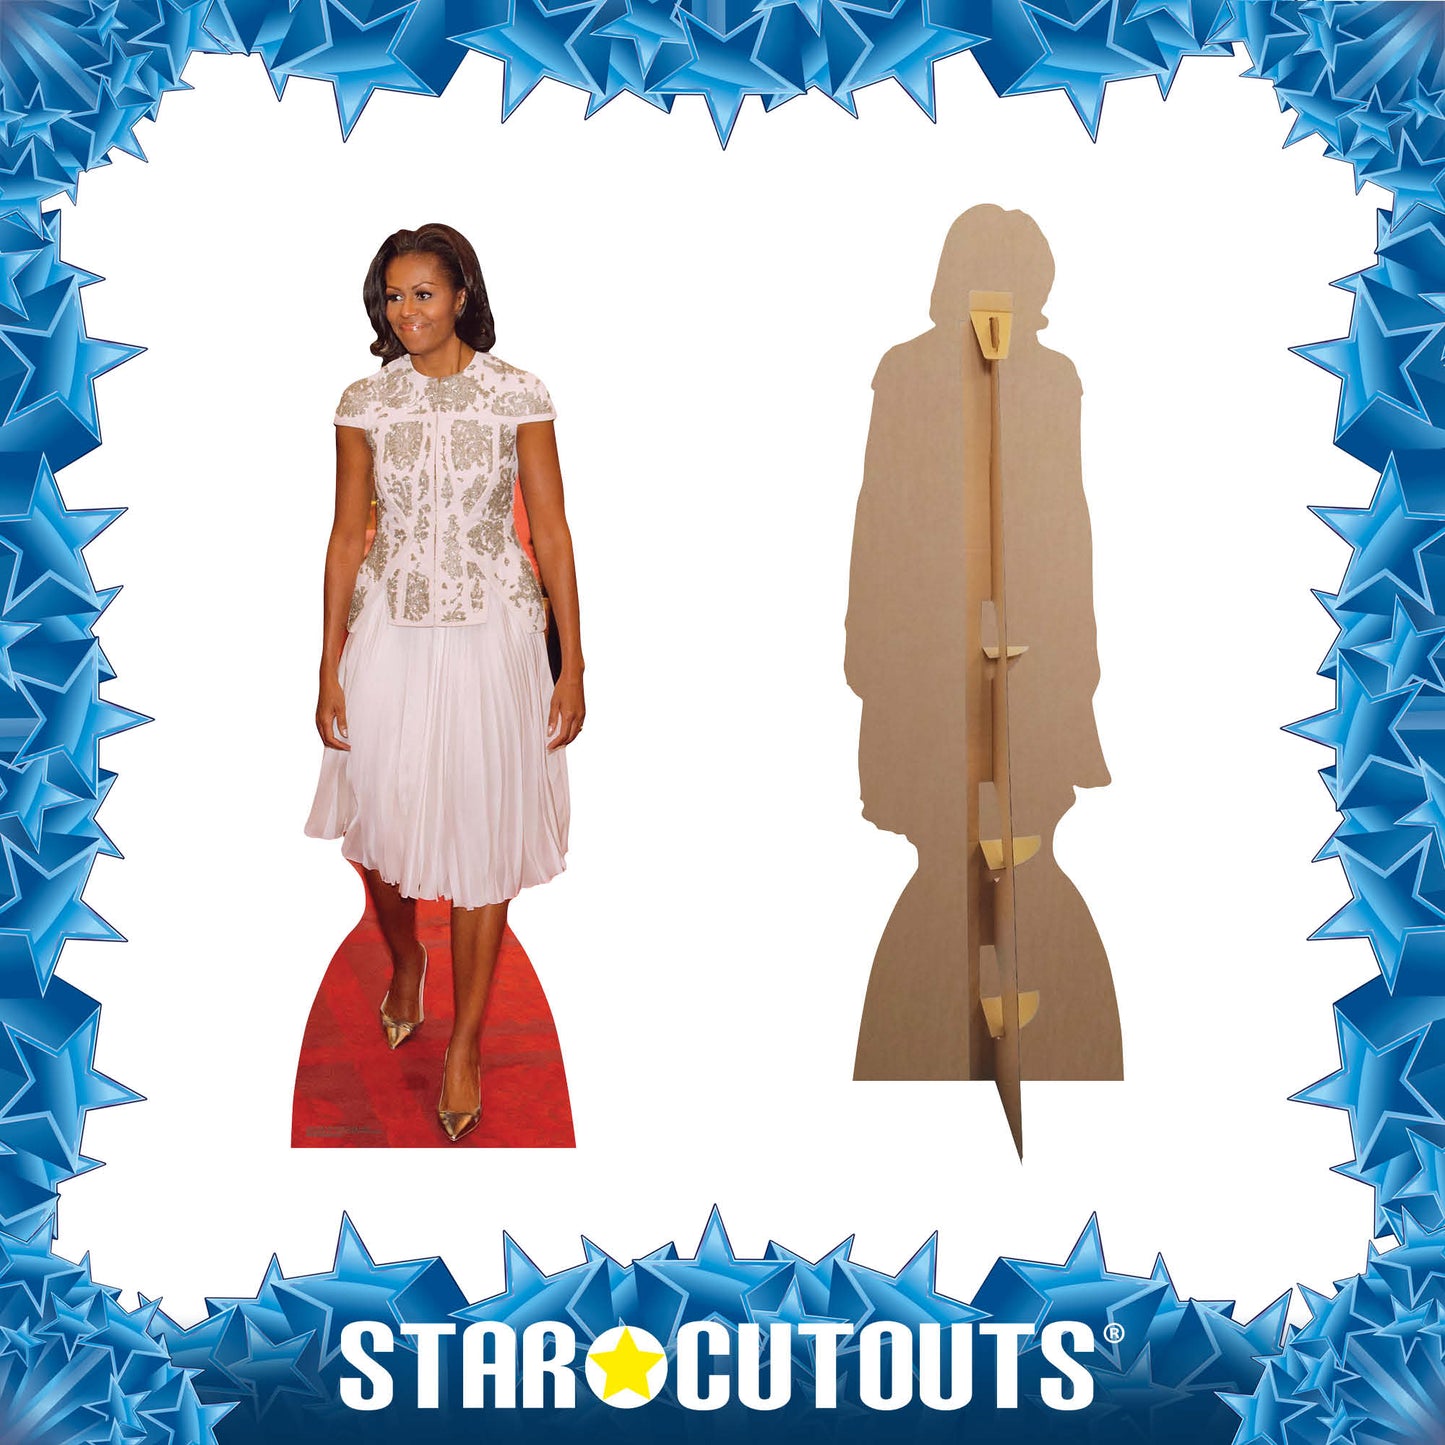 First Lady Michelle Obama Dress Cardboard Cutout Politician